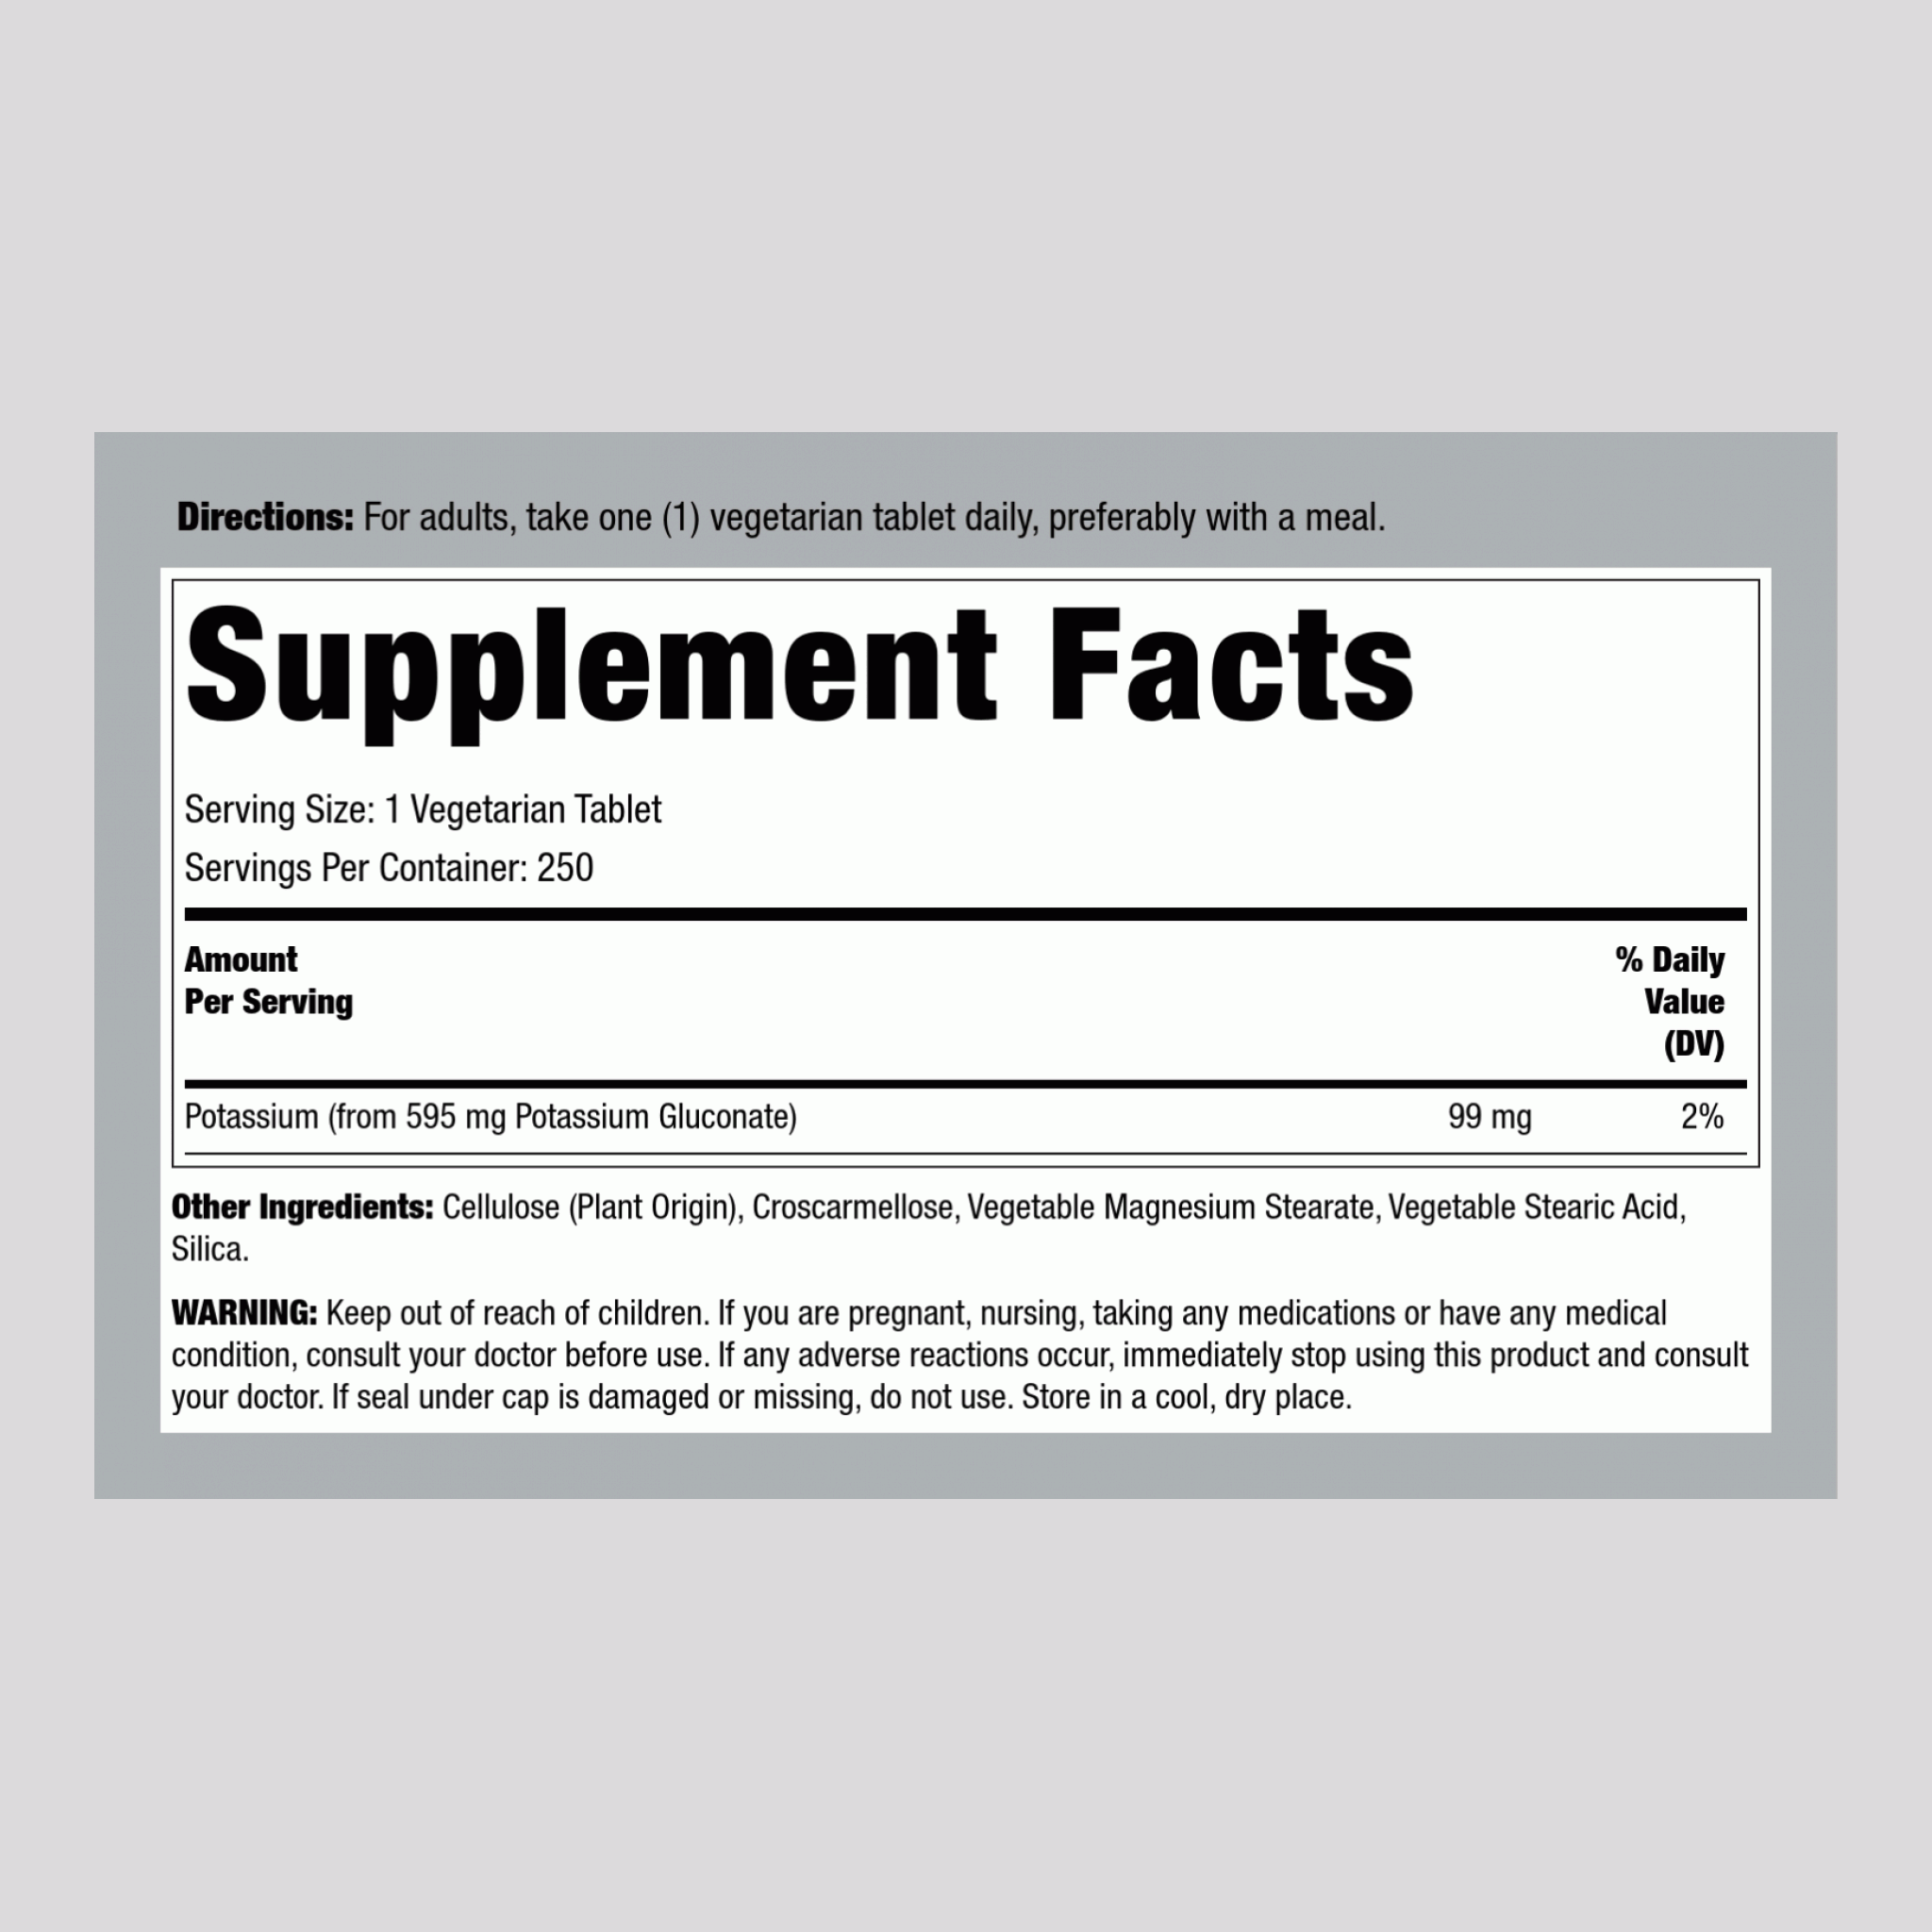 Potassium Gluconate, 99 mg, 250 Vegetarian Tablets